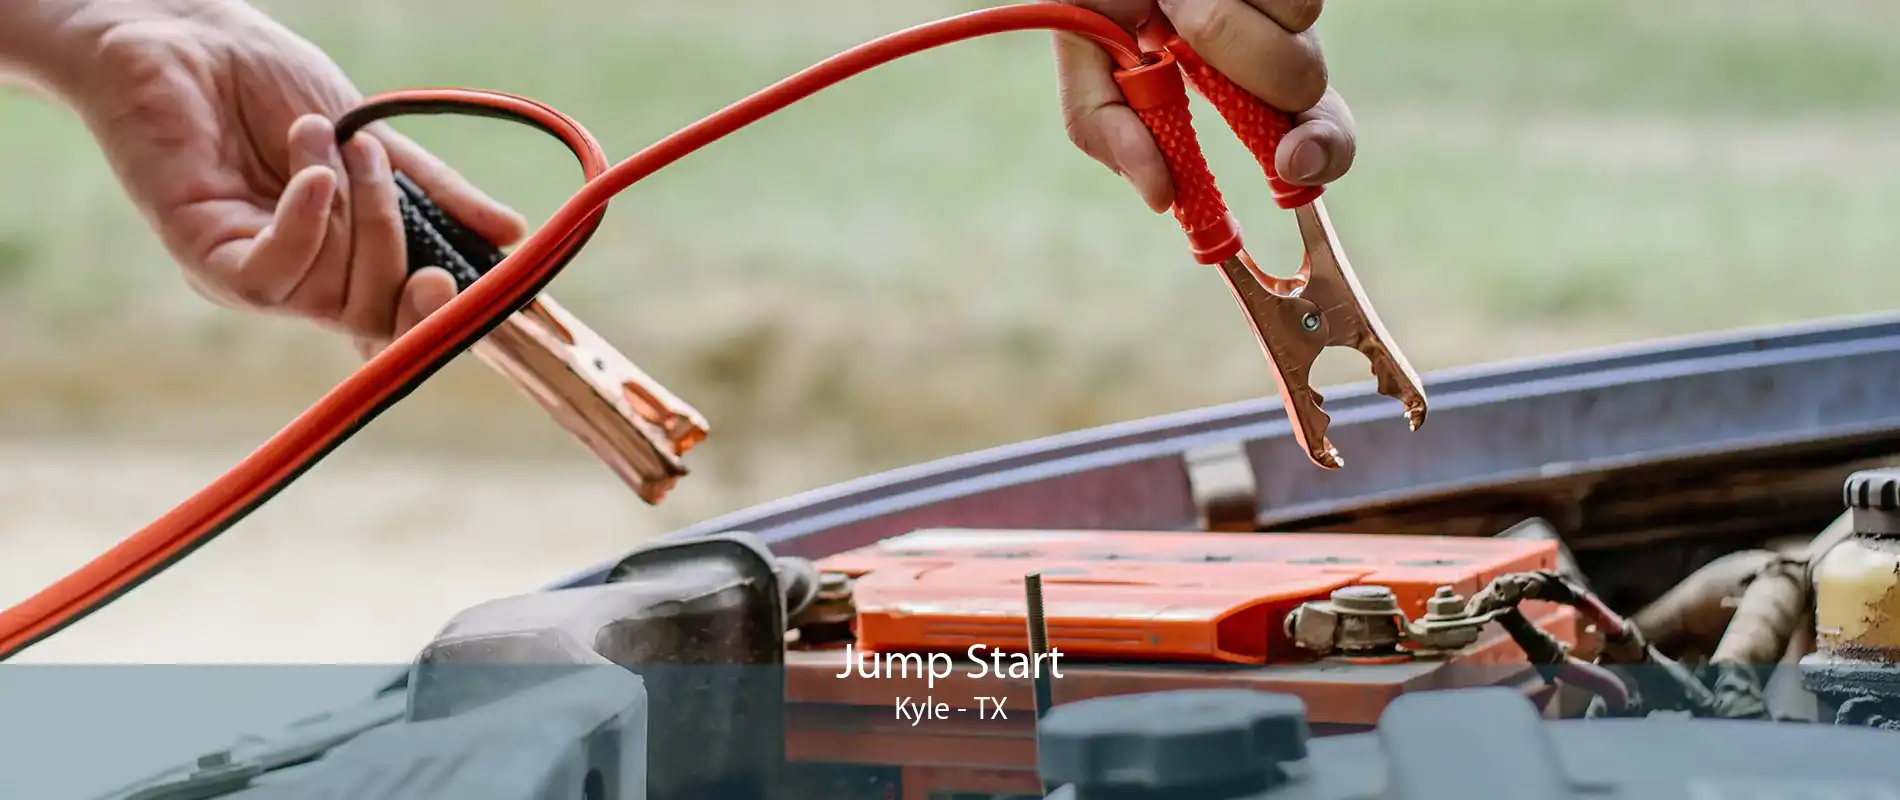 Jump Start Kyle - TX